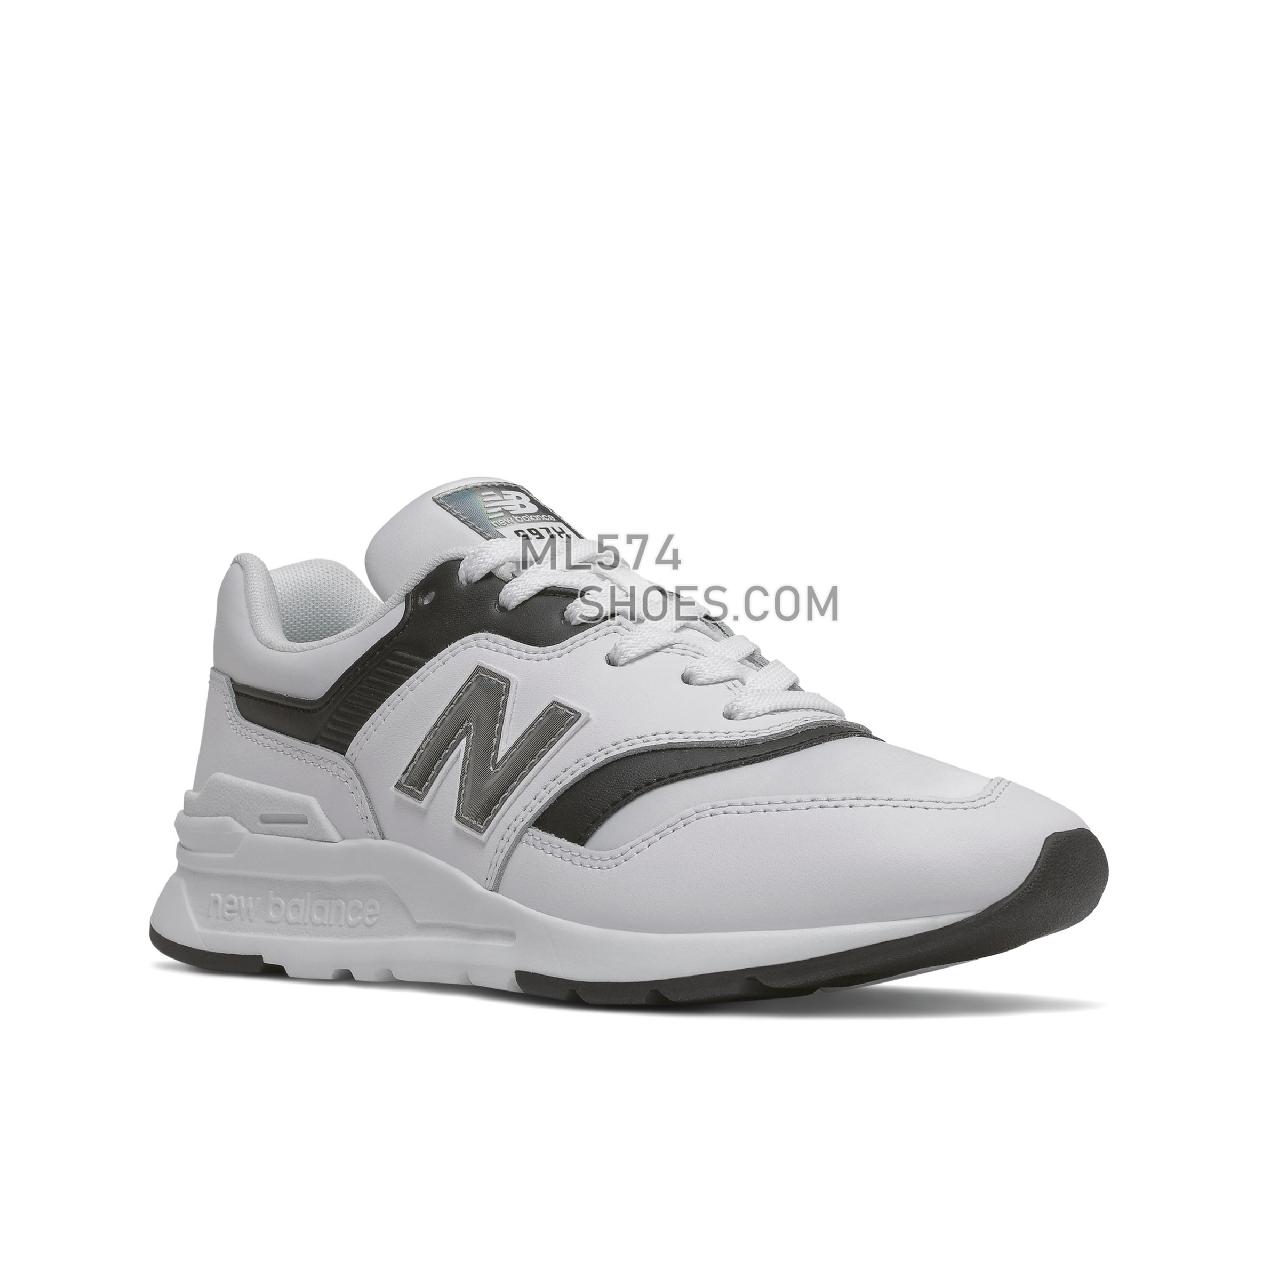 New Balance 997H - Women's Classic Sneakers - White - CW997HSS